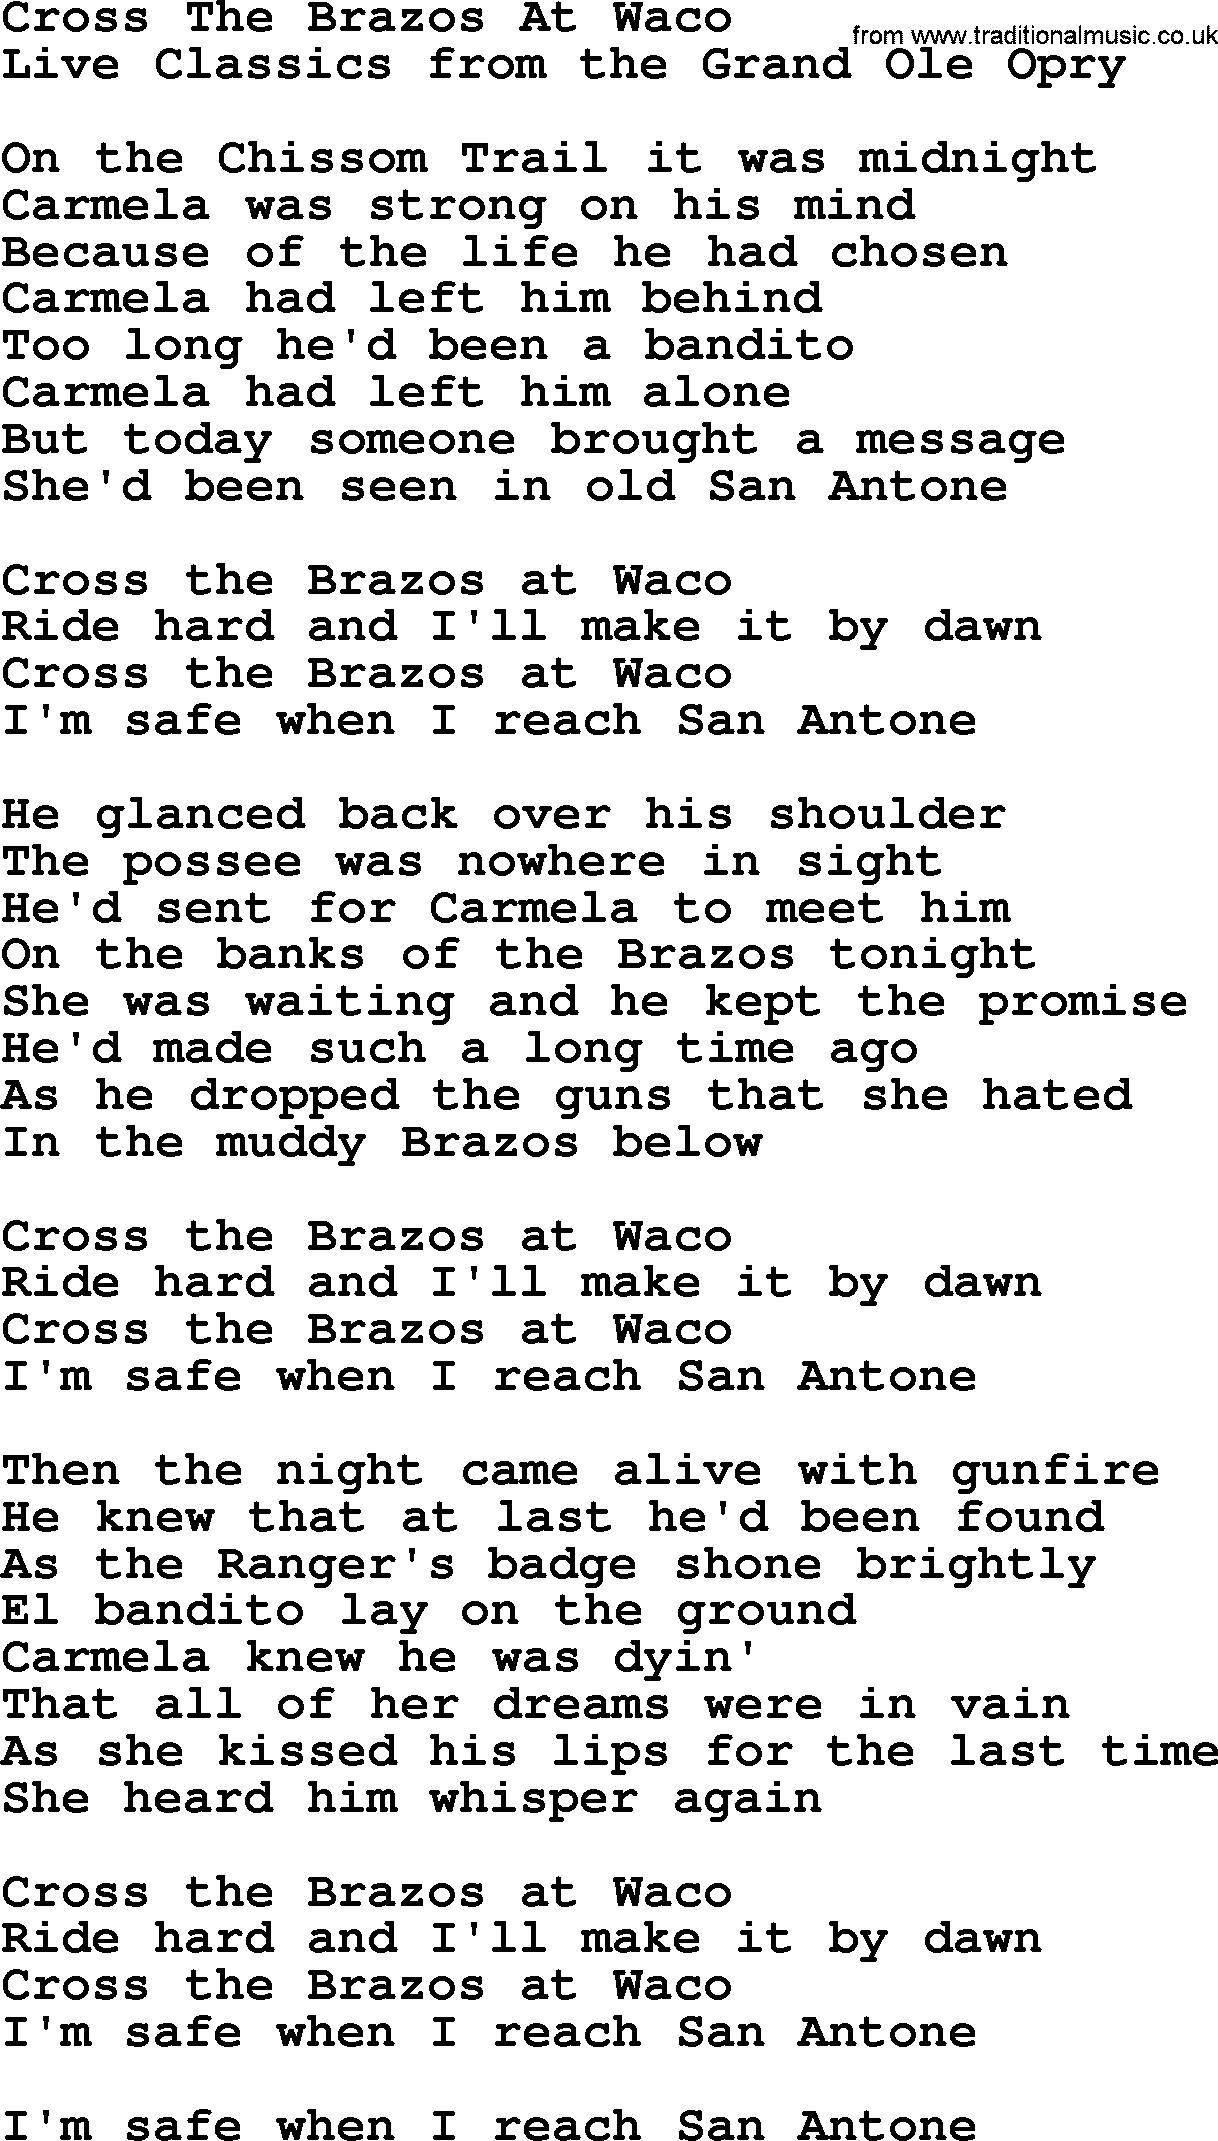 Marty Robbins song: Cross The Brazos At Waco, lyrics